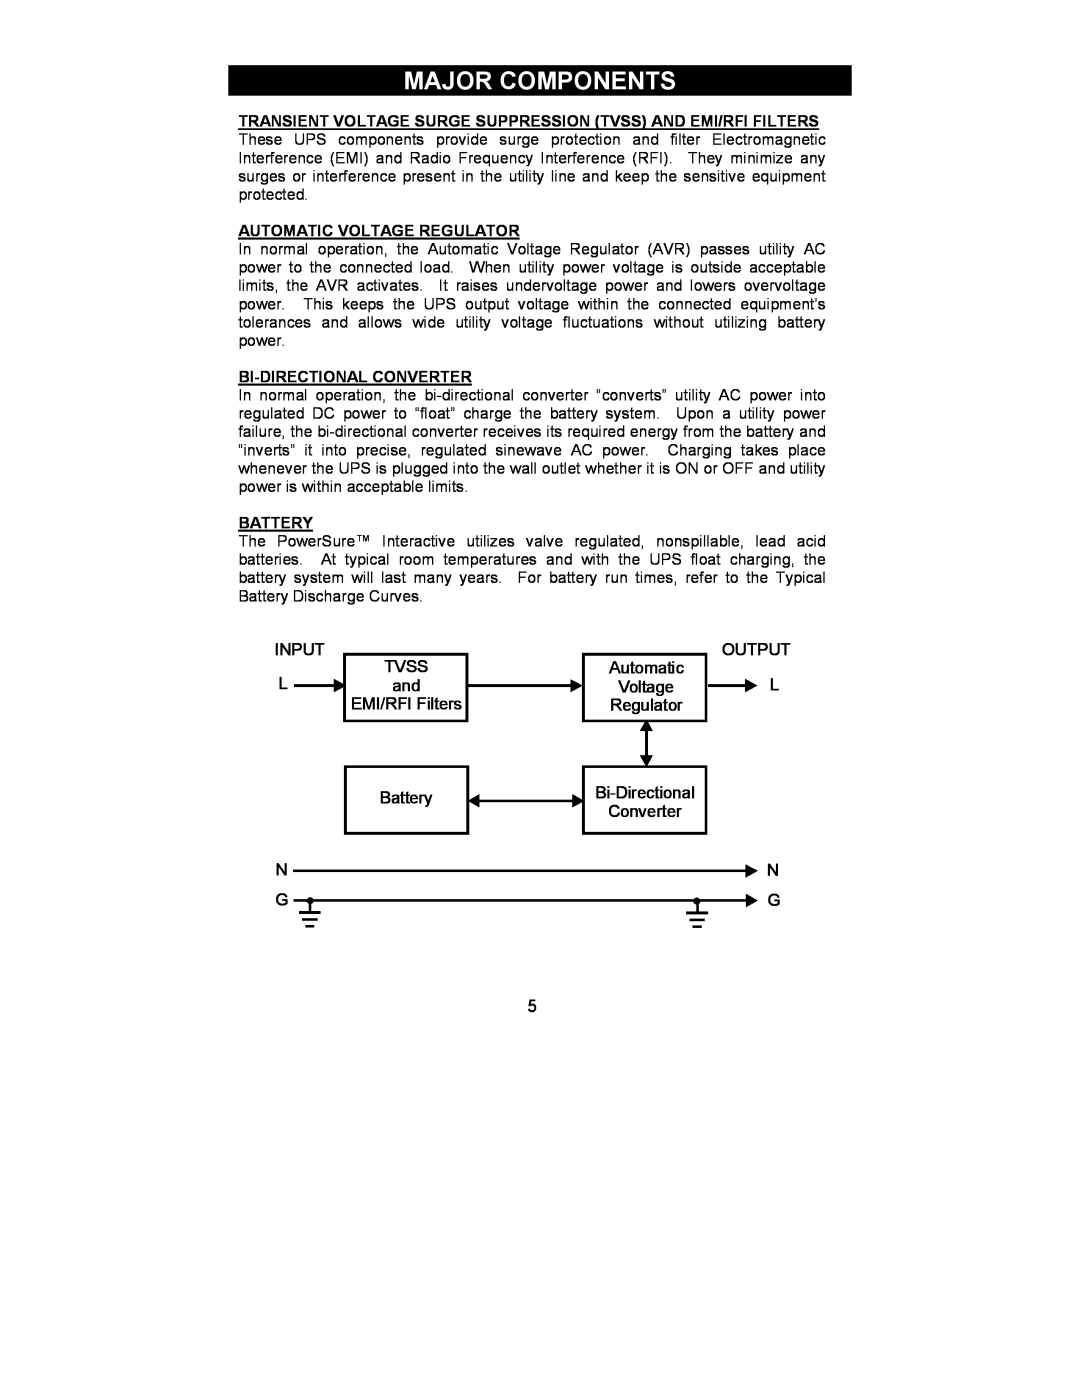 Liebert 700-2200 VA user manual Major Components, Automatic Voltage Regulator, Bi-Directional Converter, Battery 